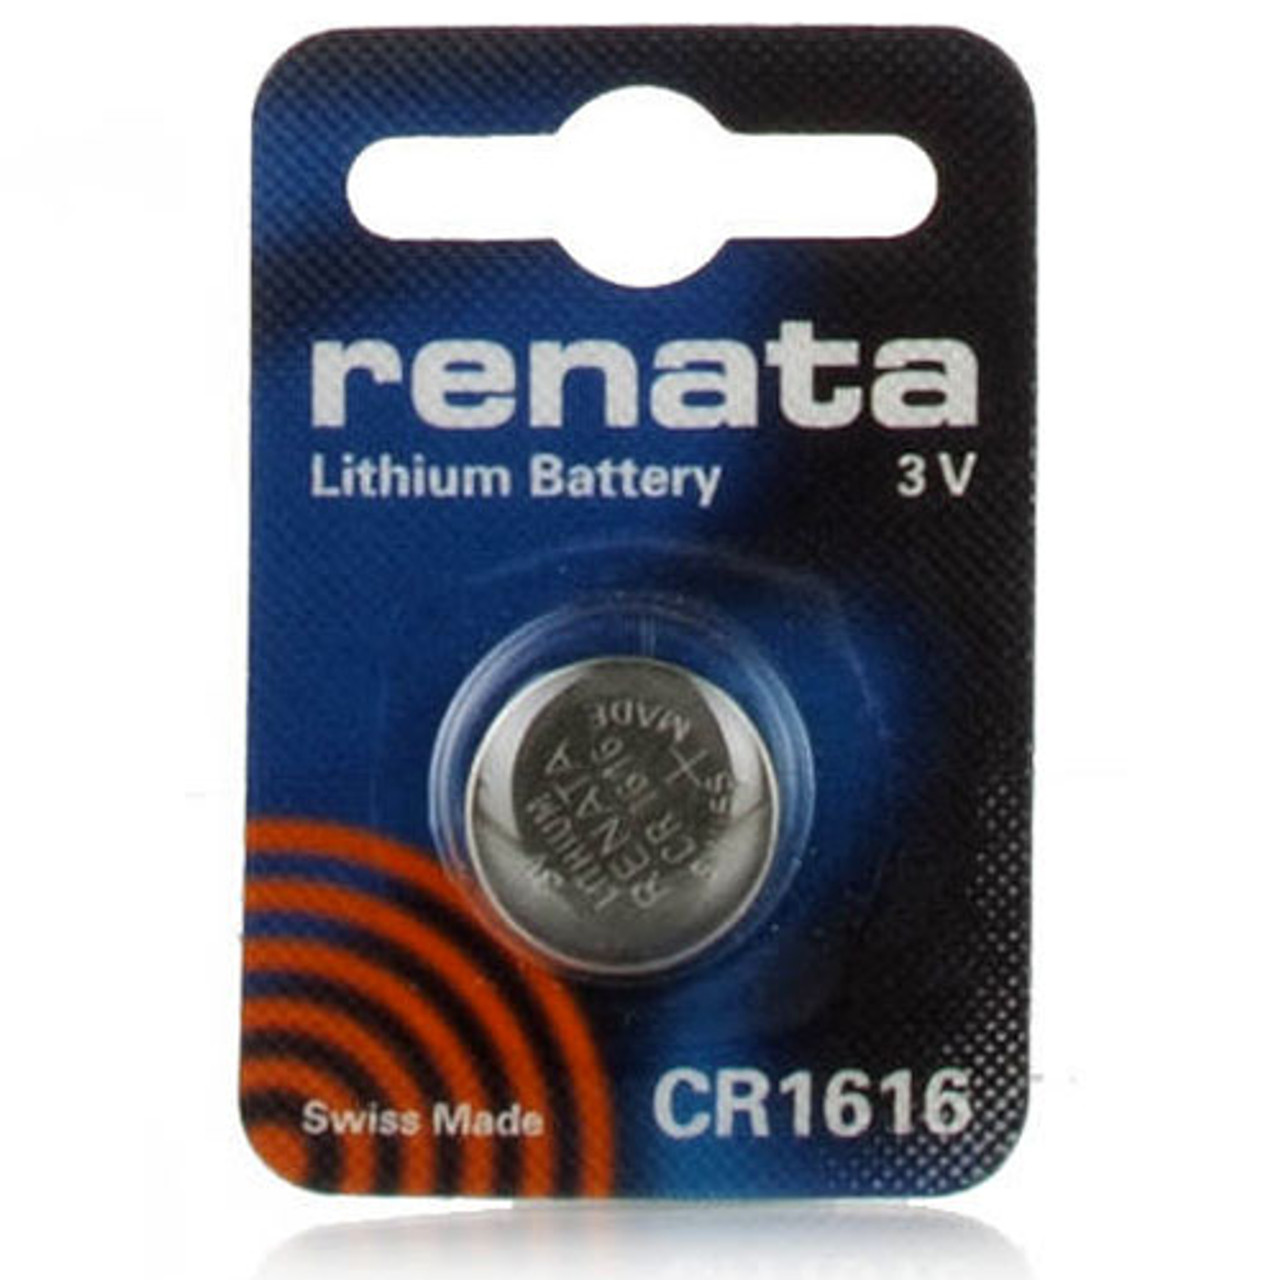 Renata CR1616 3V Lithium Button Cells Battery - Blister Retail